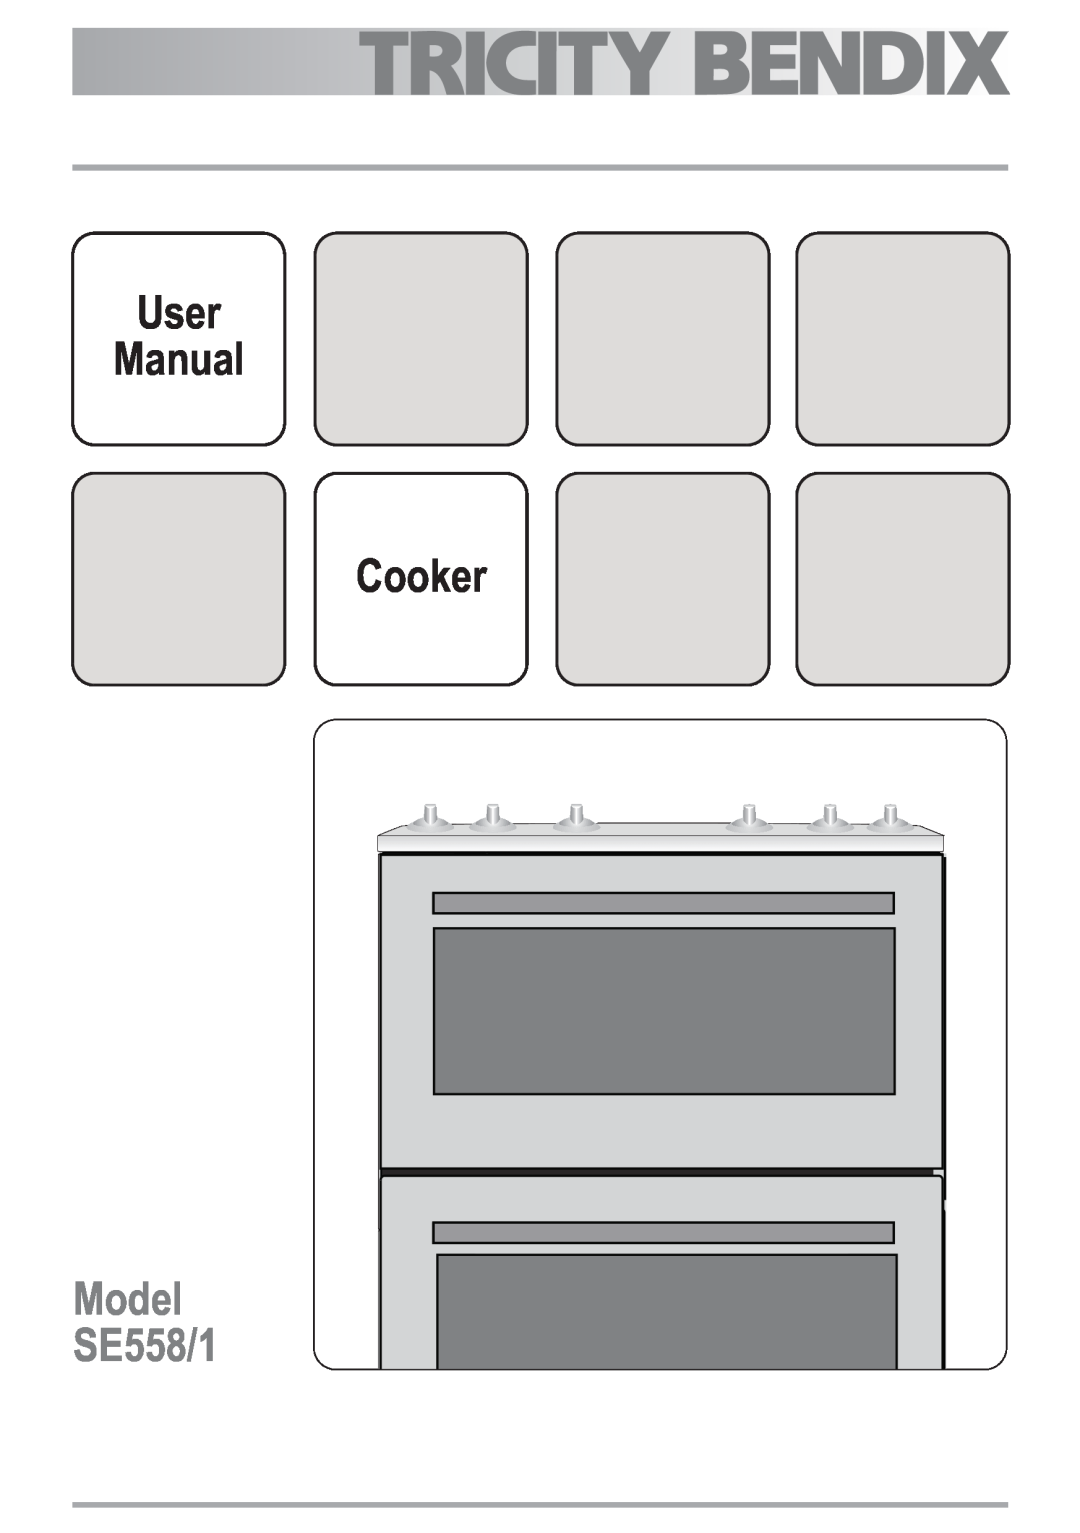 Tricity Bendix user manual User Manual Cooker, Model SE558/1 